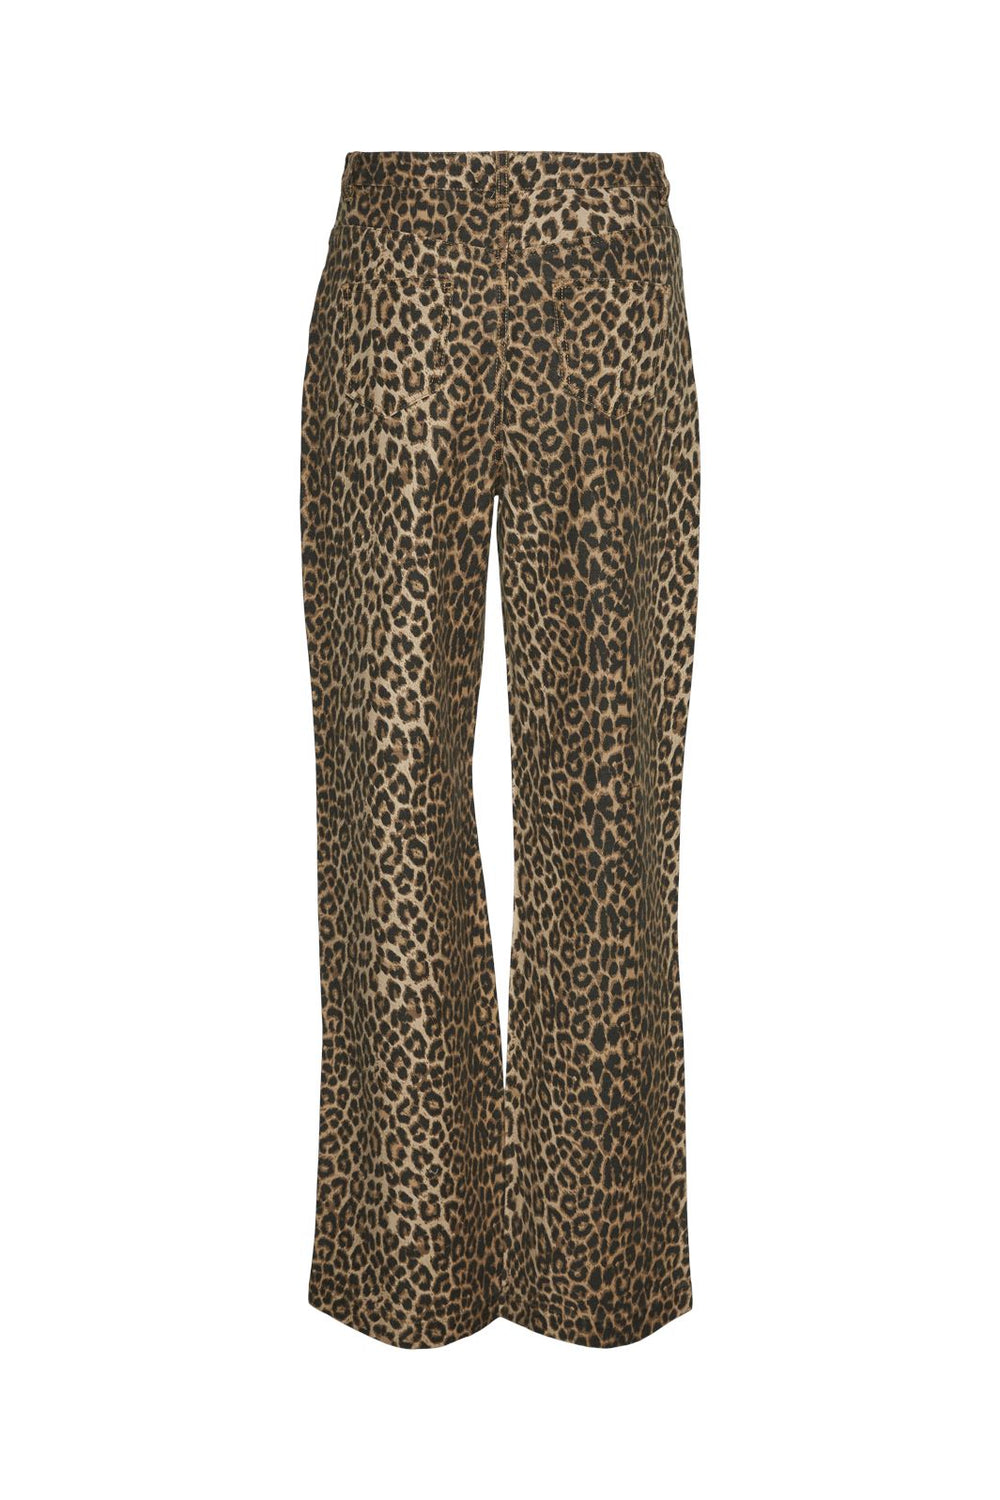 Vero Moda - Vmtessa Hr Wide Leo Jeans - 4672804 Silver Mink Leopard